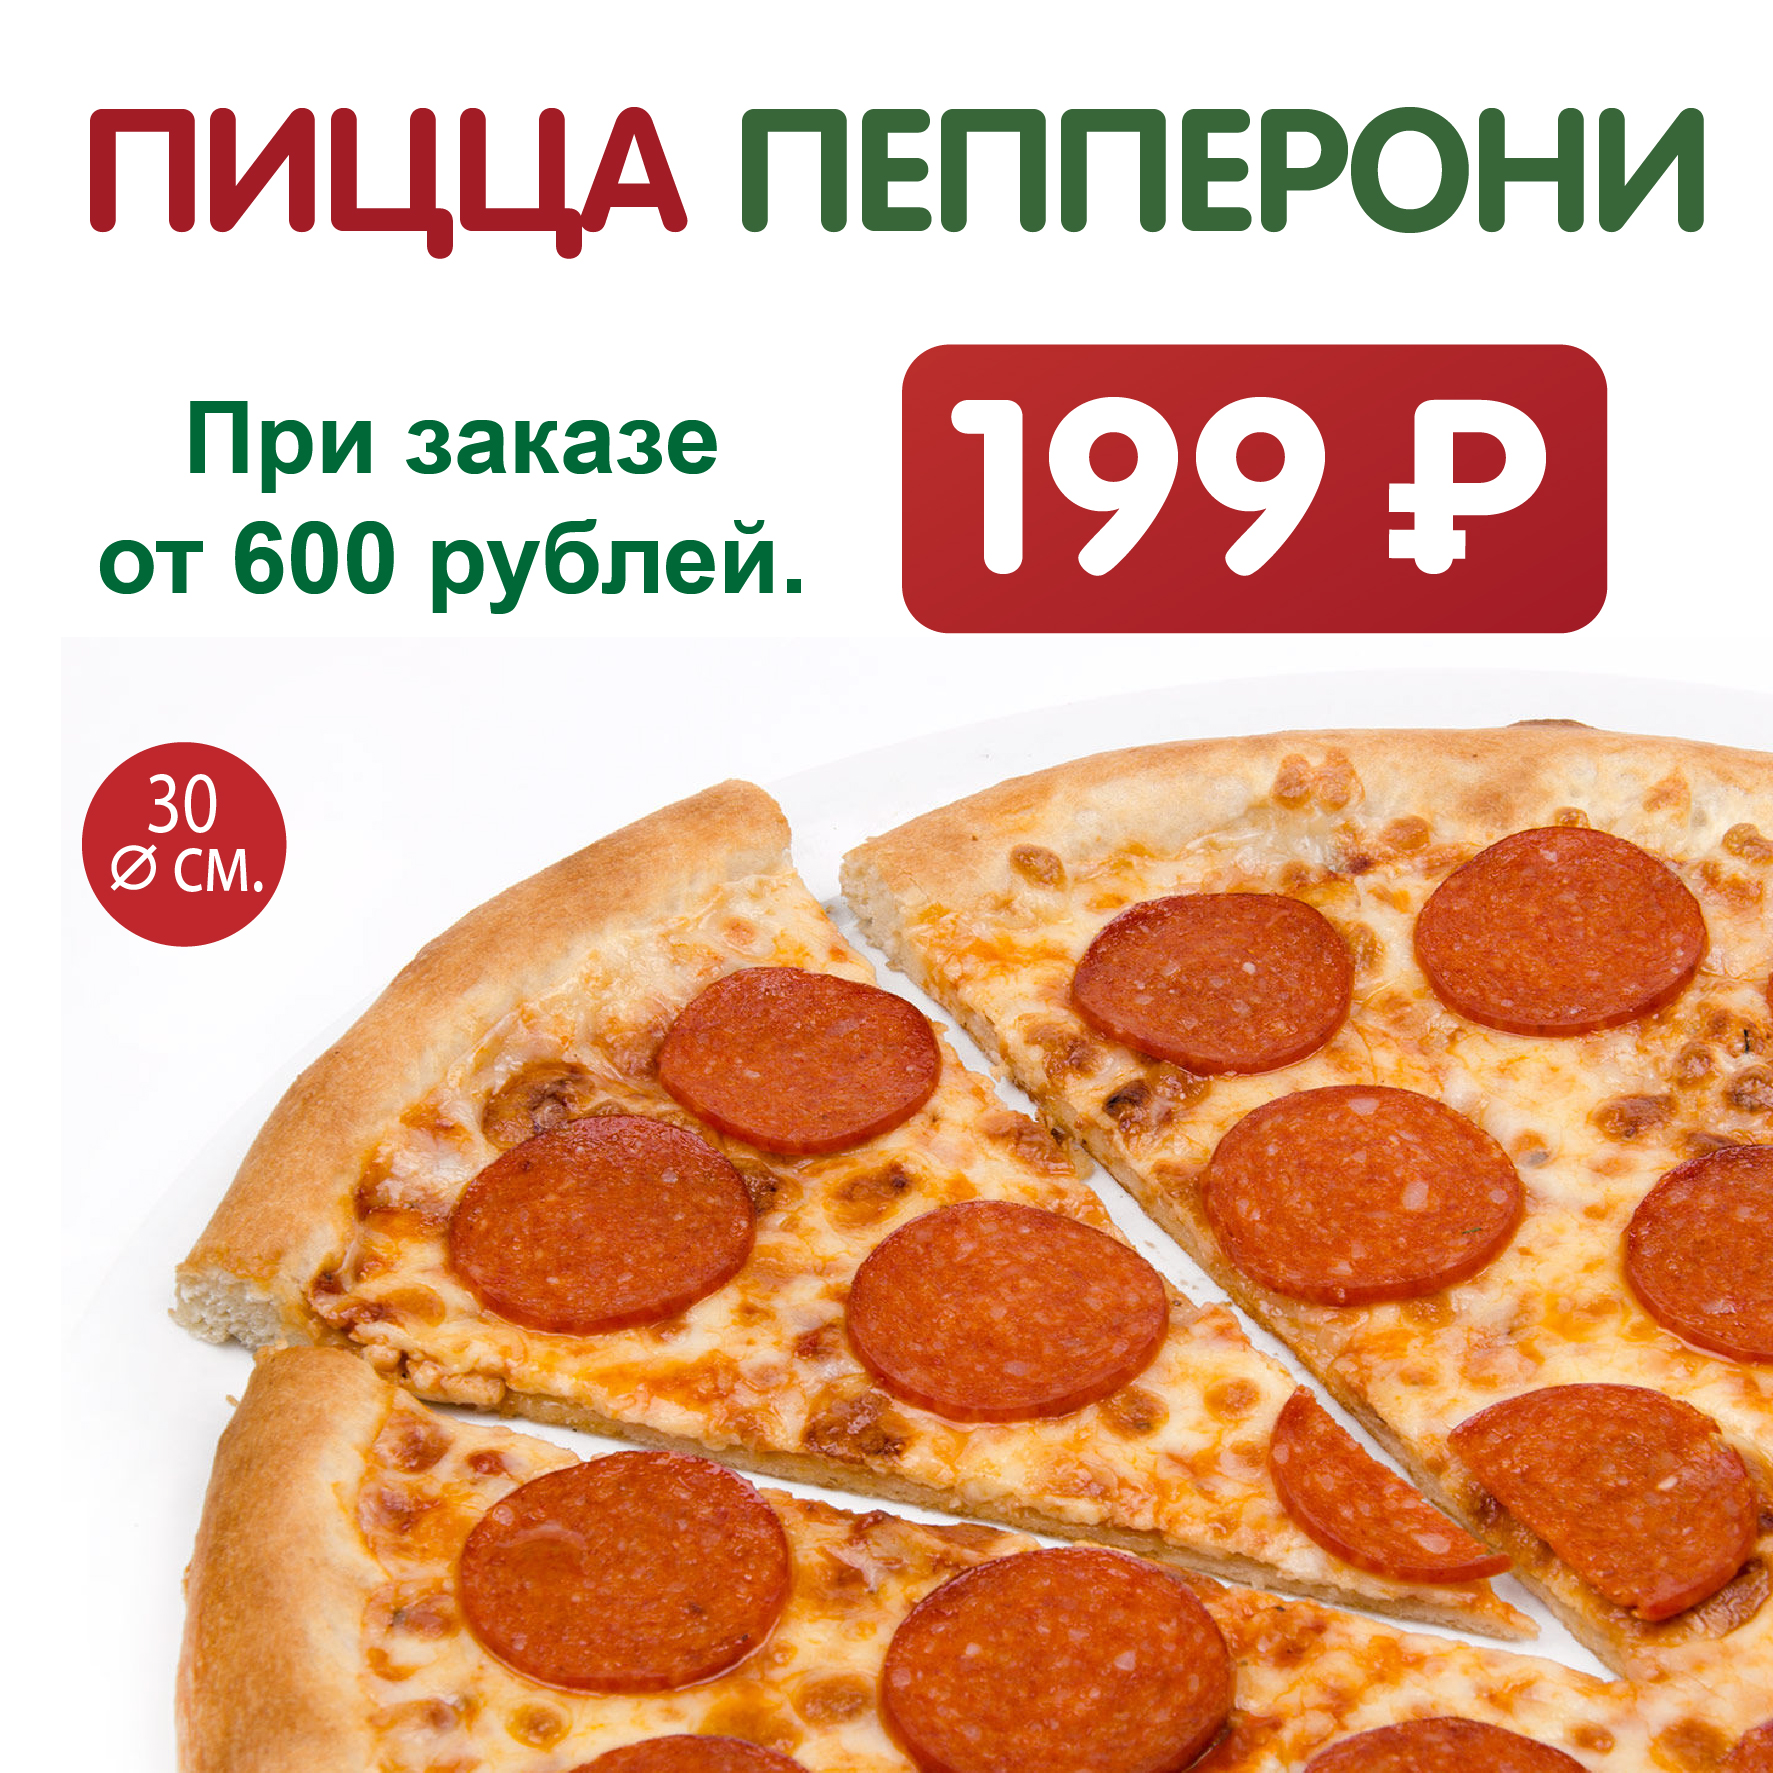 сколько стоит 1 пицца пепперони (120) фото